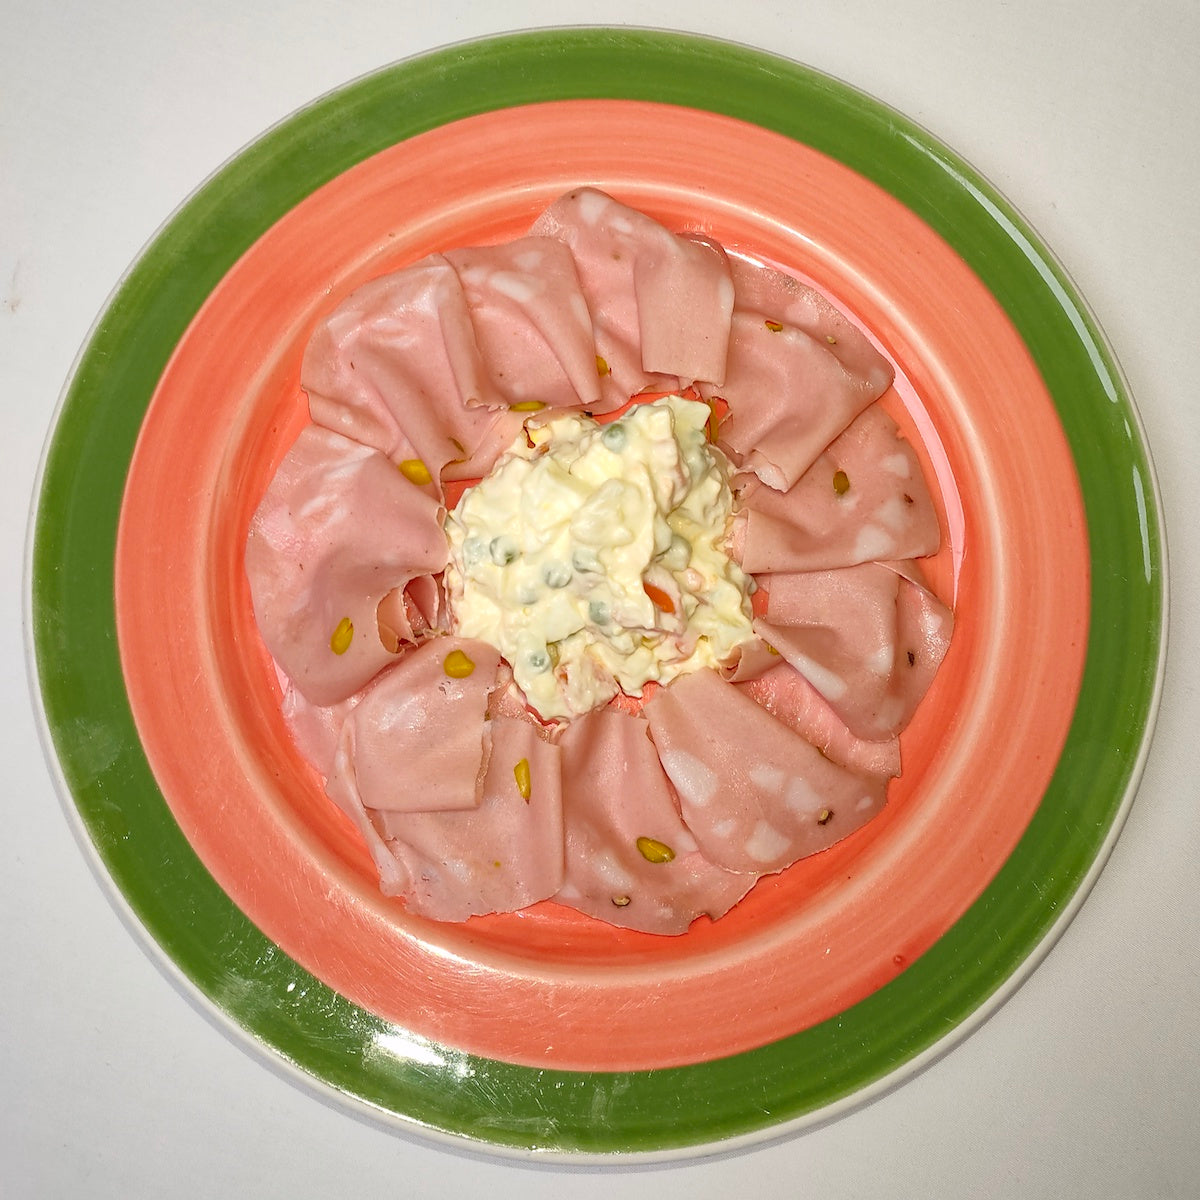 Home-made Russian Salad with Mortadella Ham & Pistachio